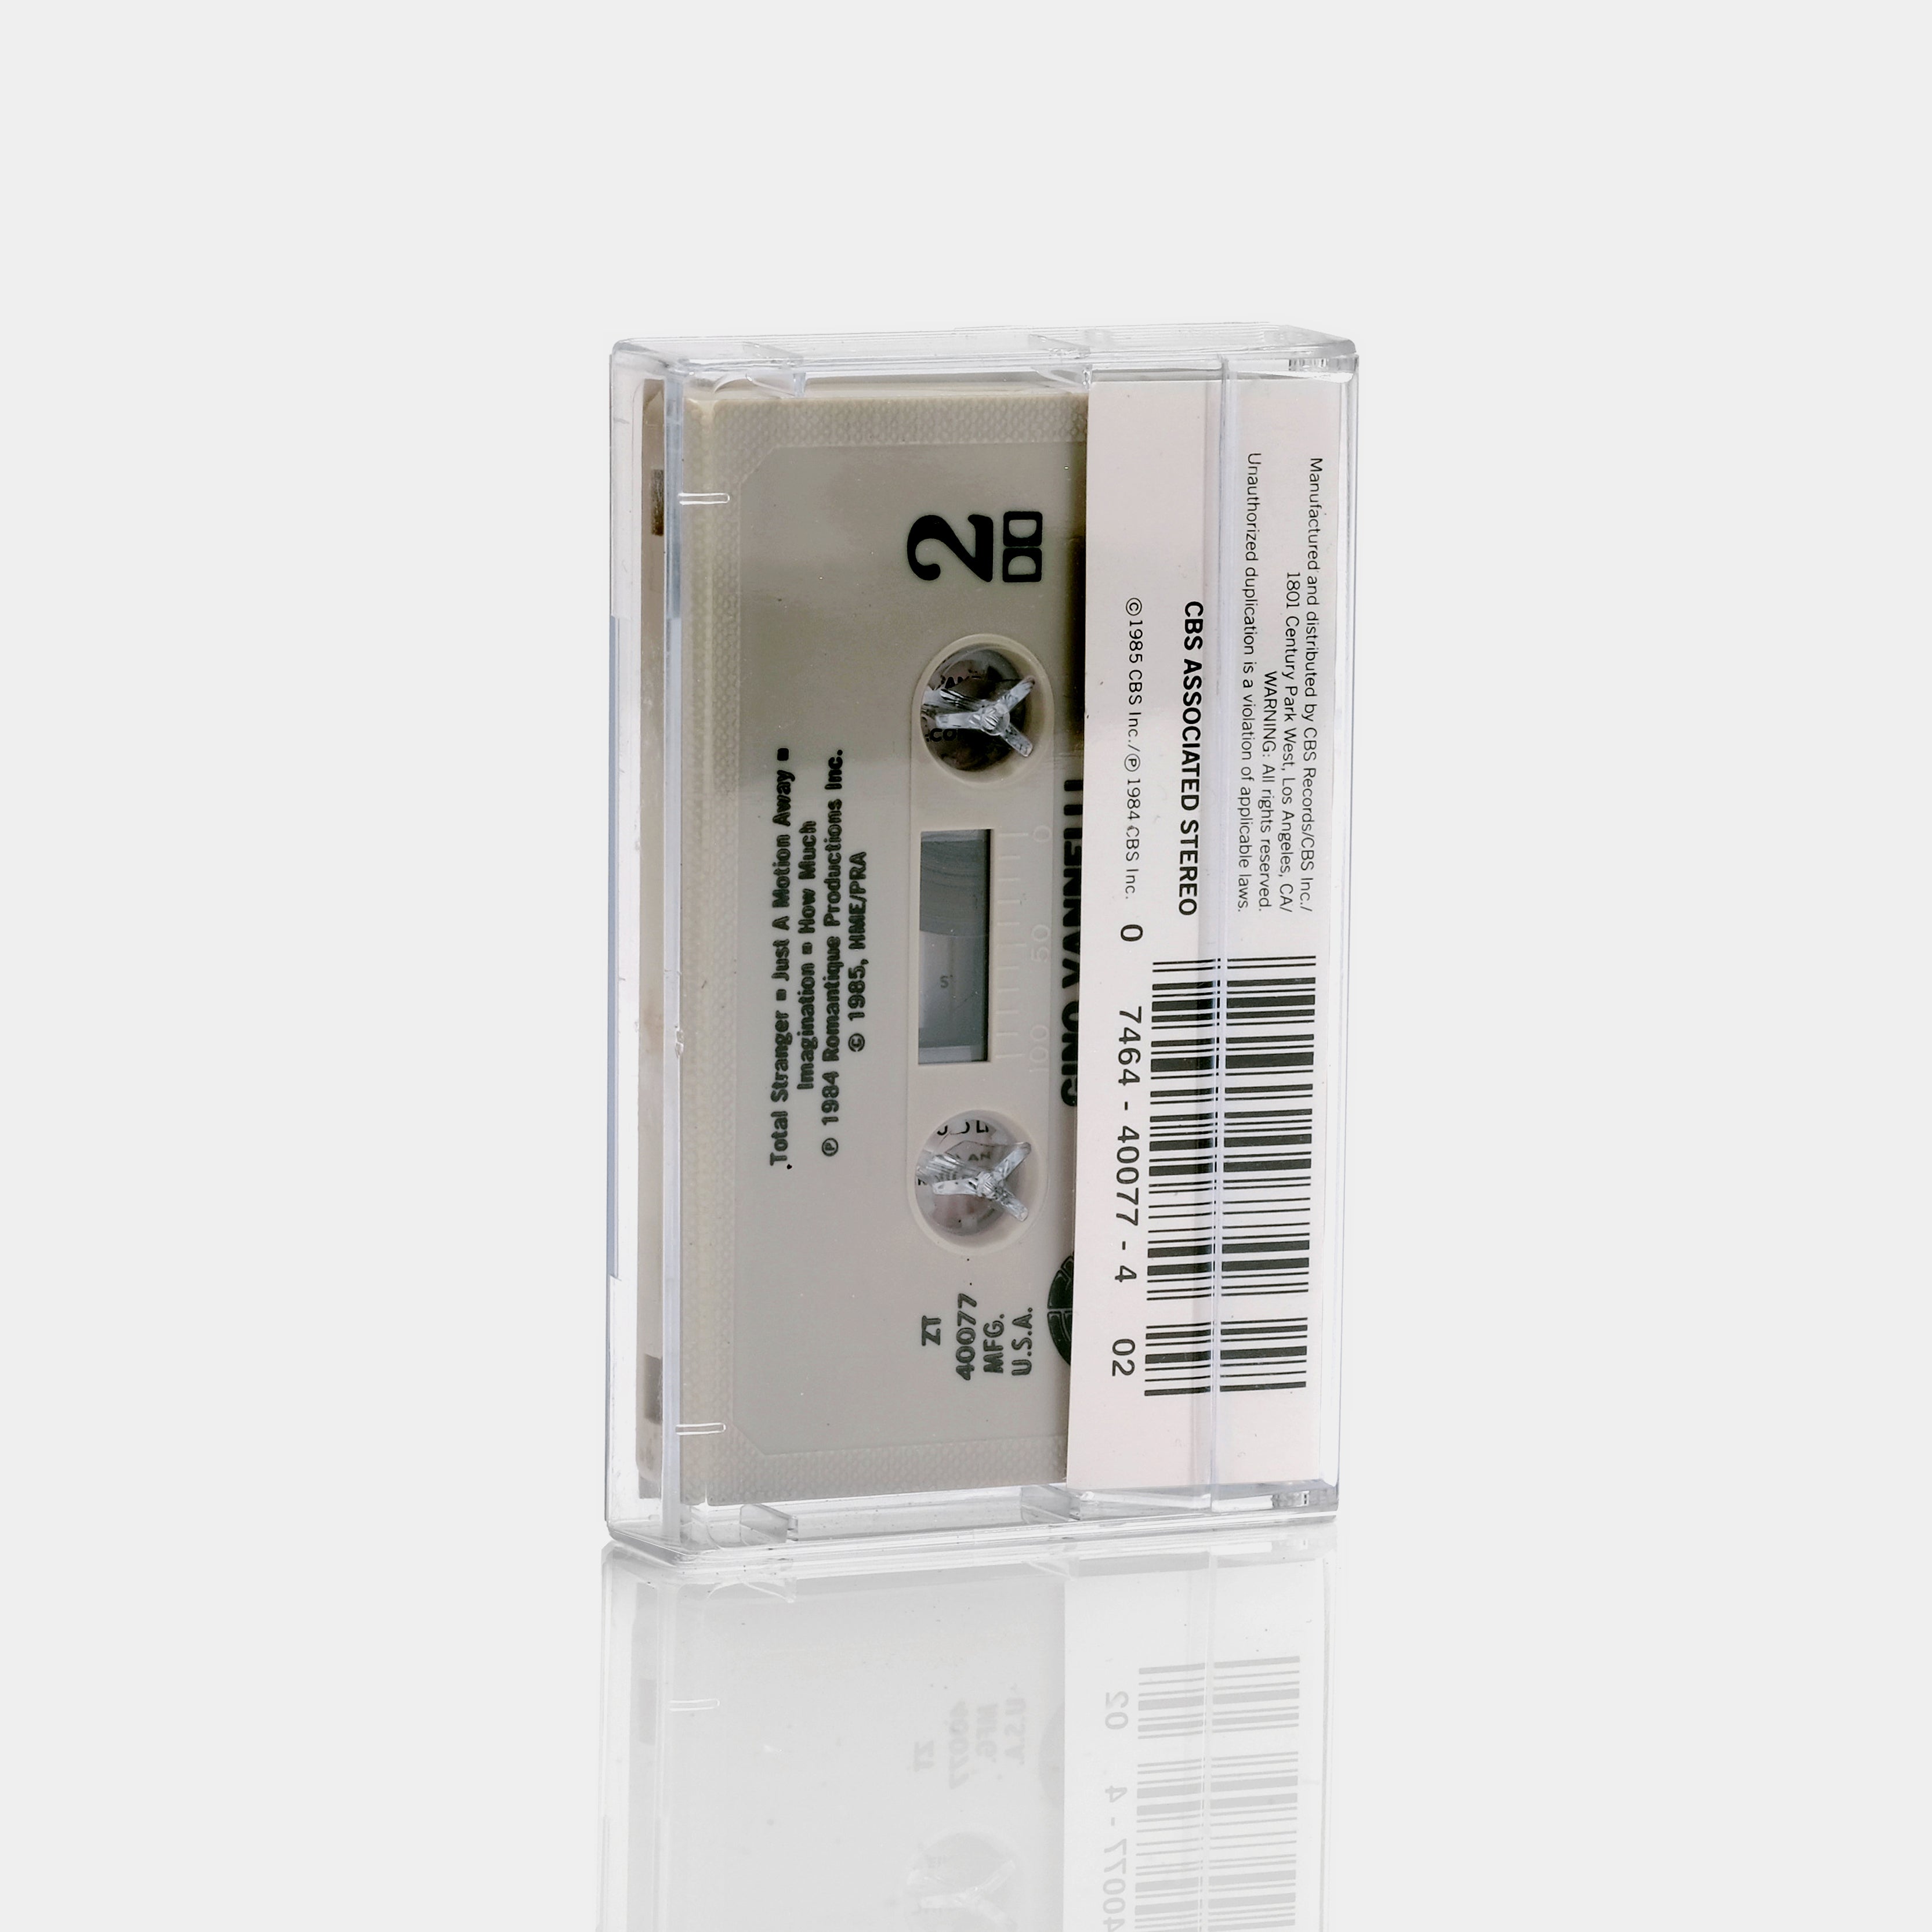 Gino Vannelli - Black Cars Cassette Tape